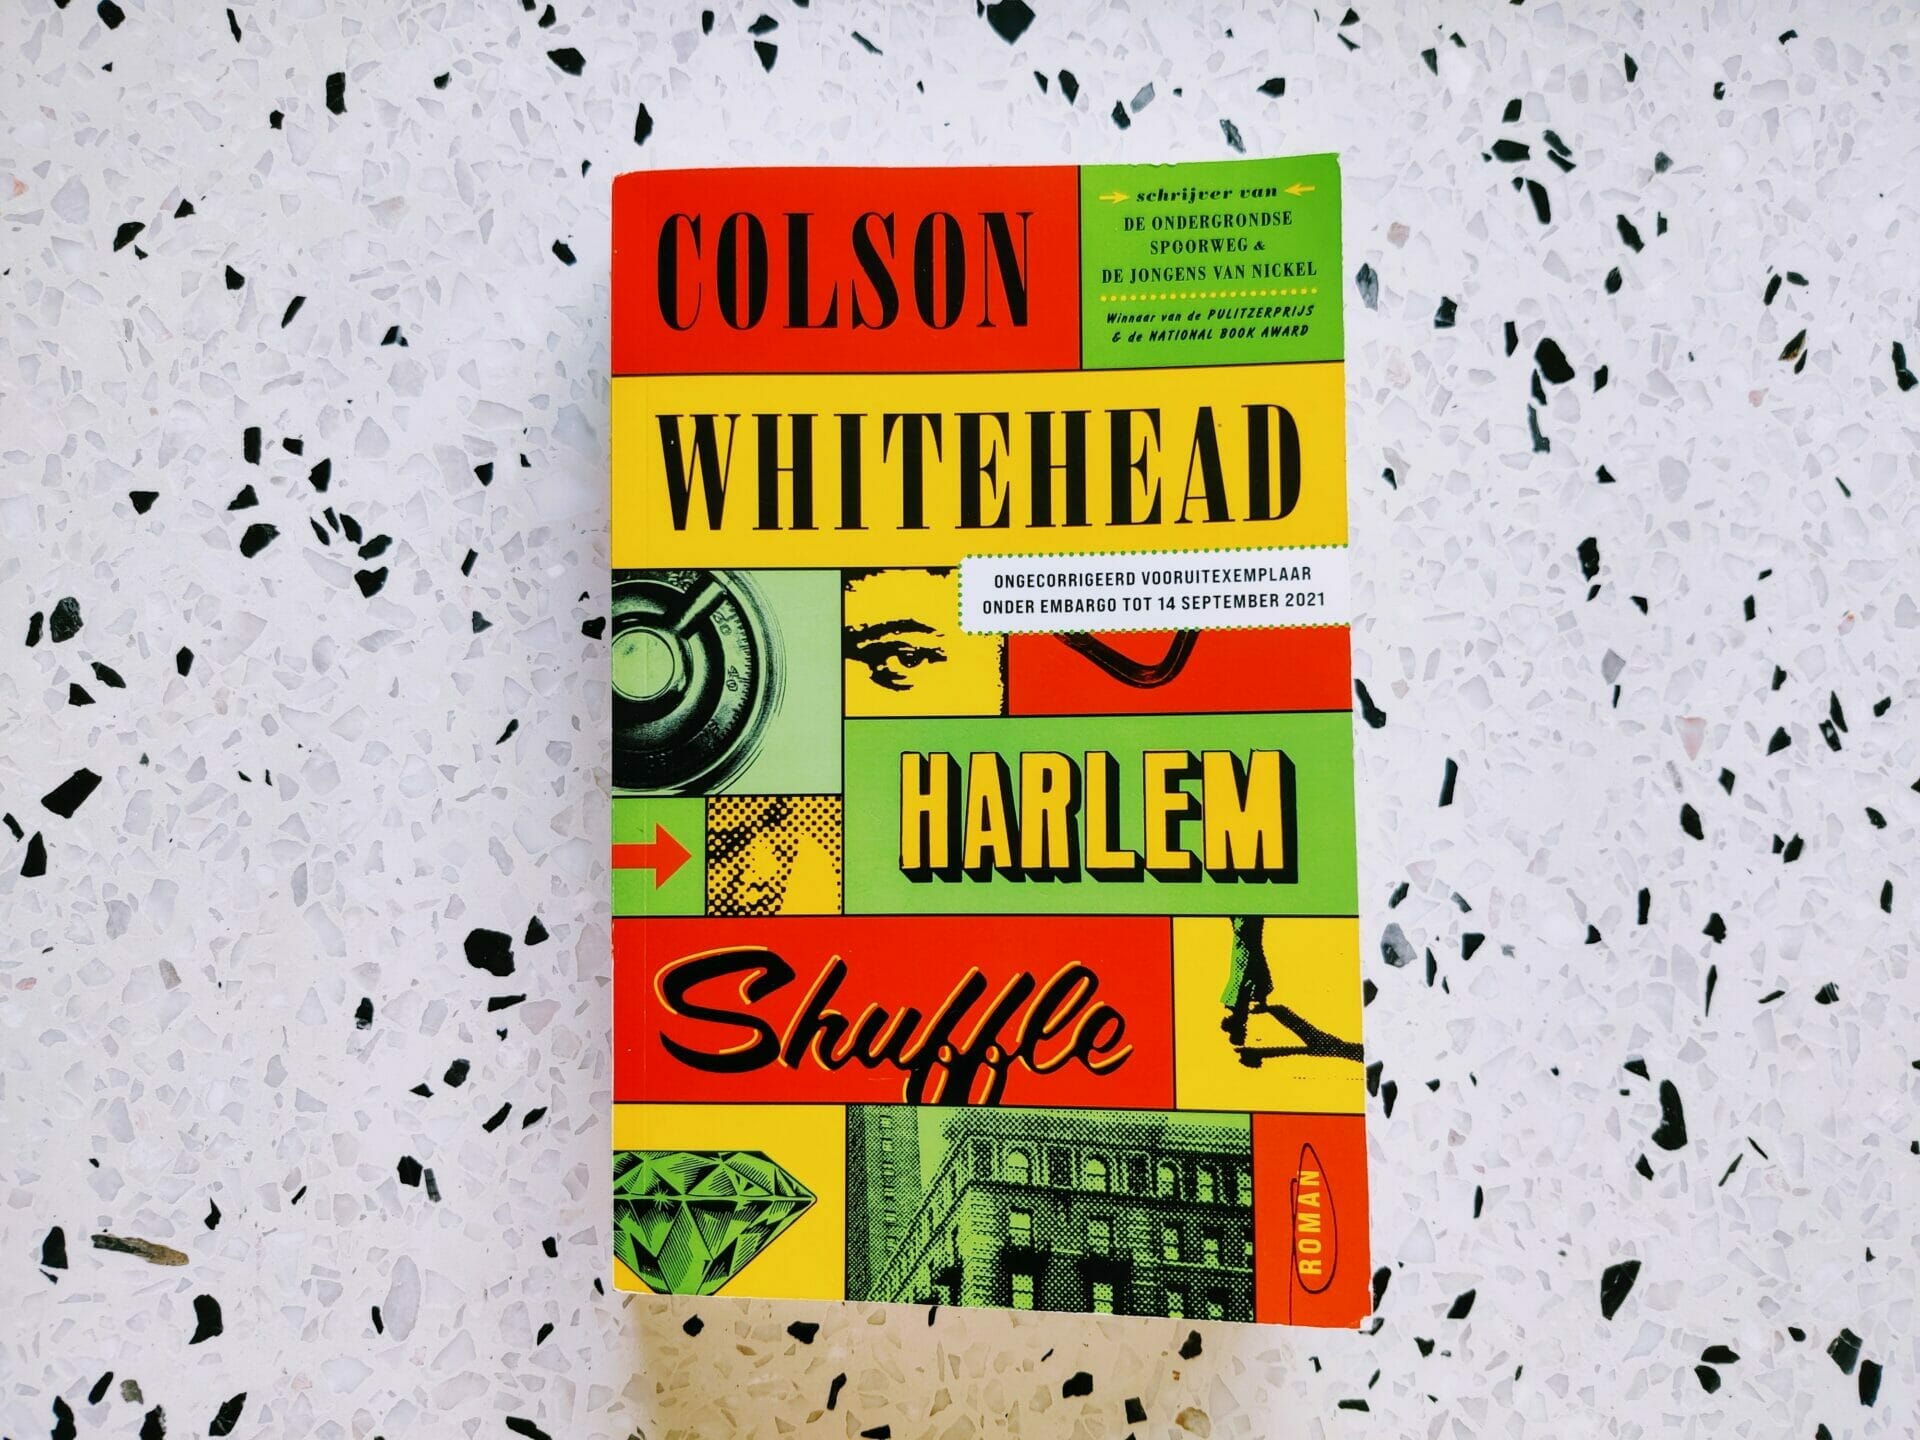 Colson Whitehead - Harlem Shuffle